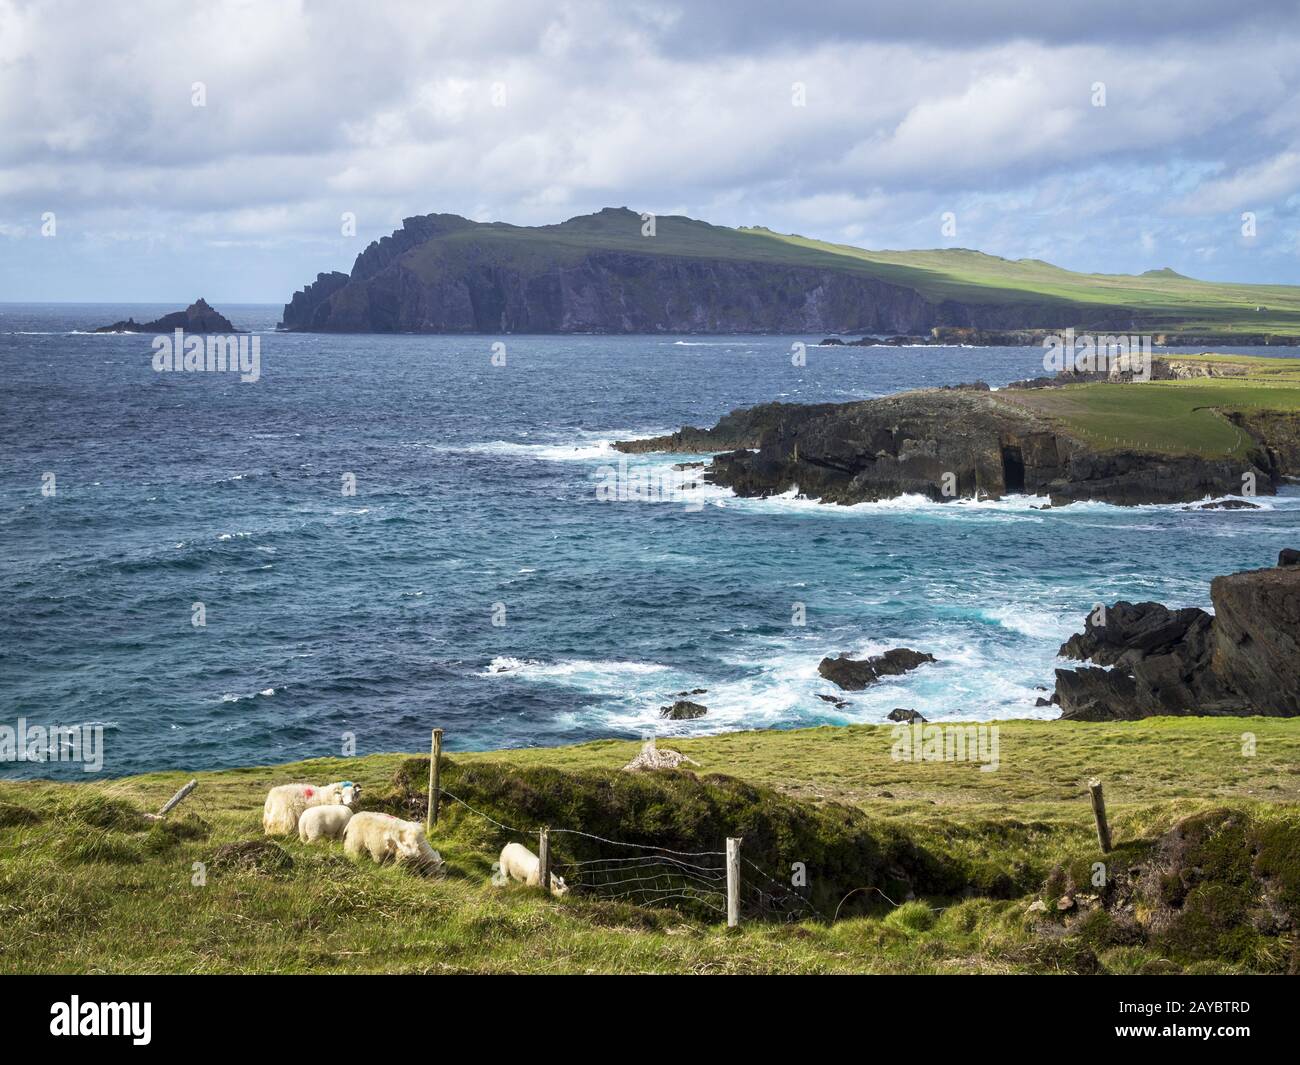 At Clogher Head Peninsula Dingle Ireland with sheep Stock Photo